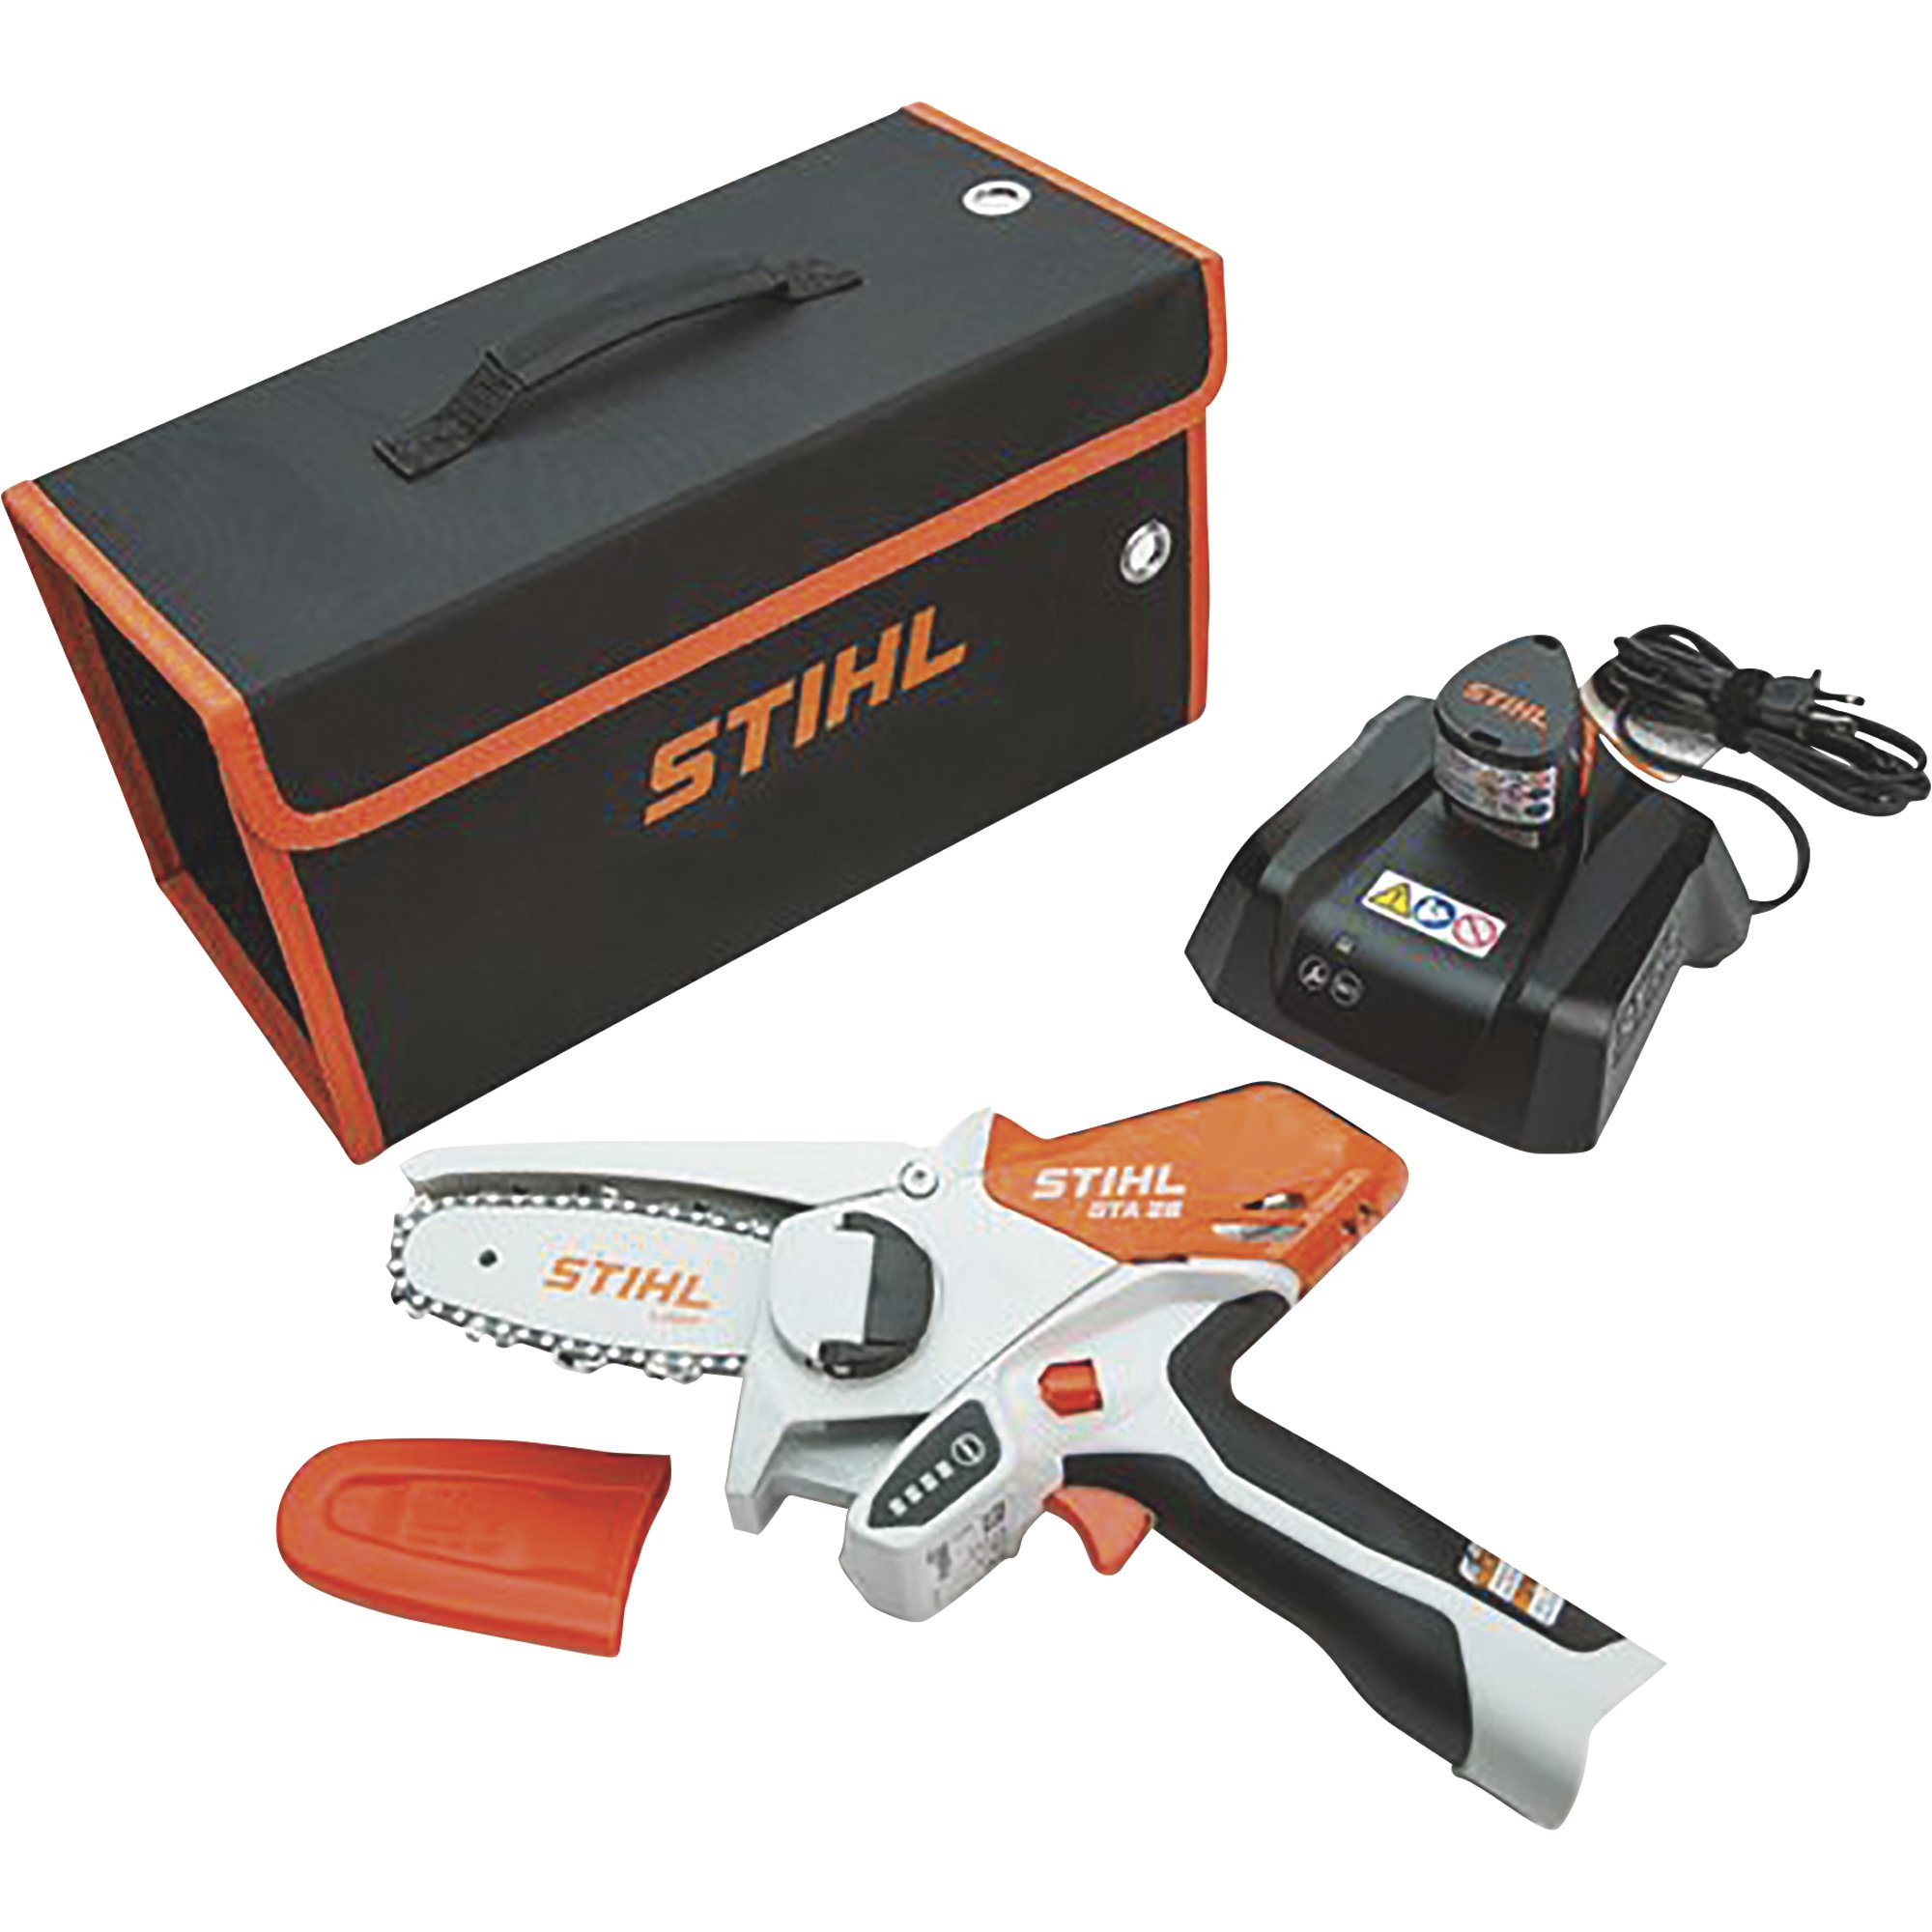 Stihl GTA 26 Mini Chainsaw Review 2023: Small Handheld Saw